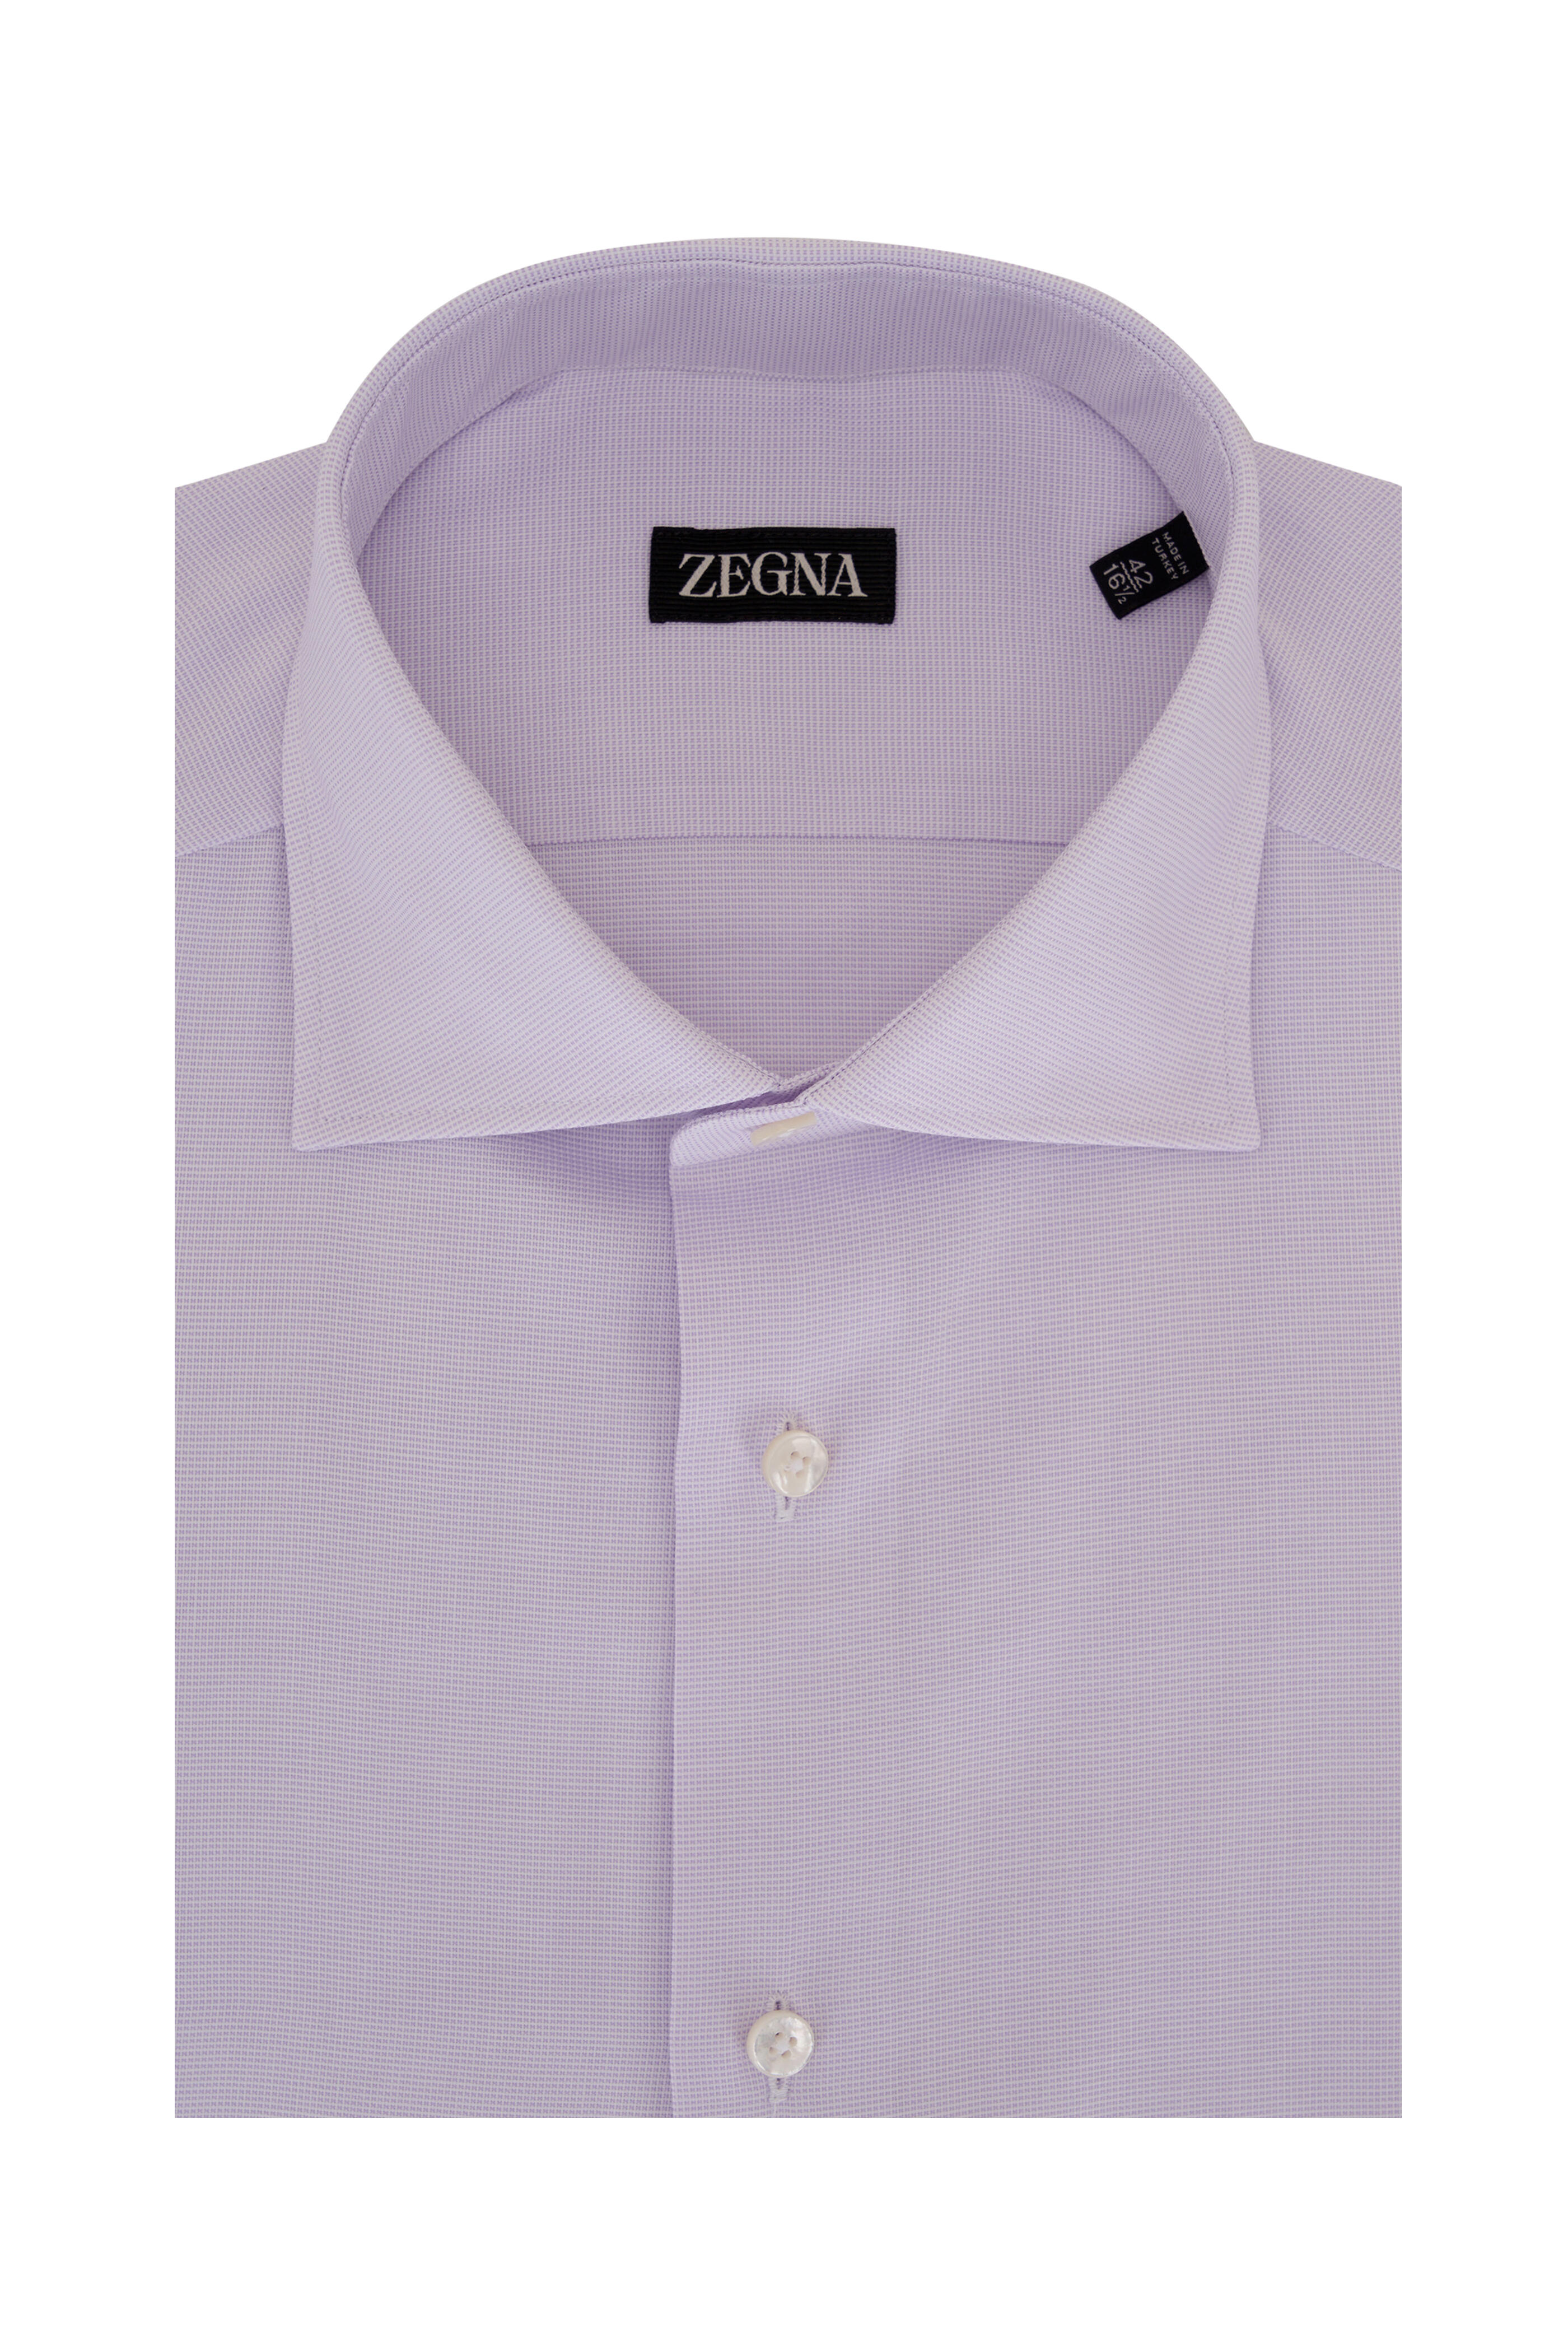 Zegna - Lavender Textured Cotton Dress Shirt | Mitchell Stores